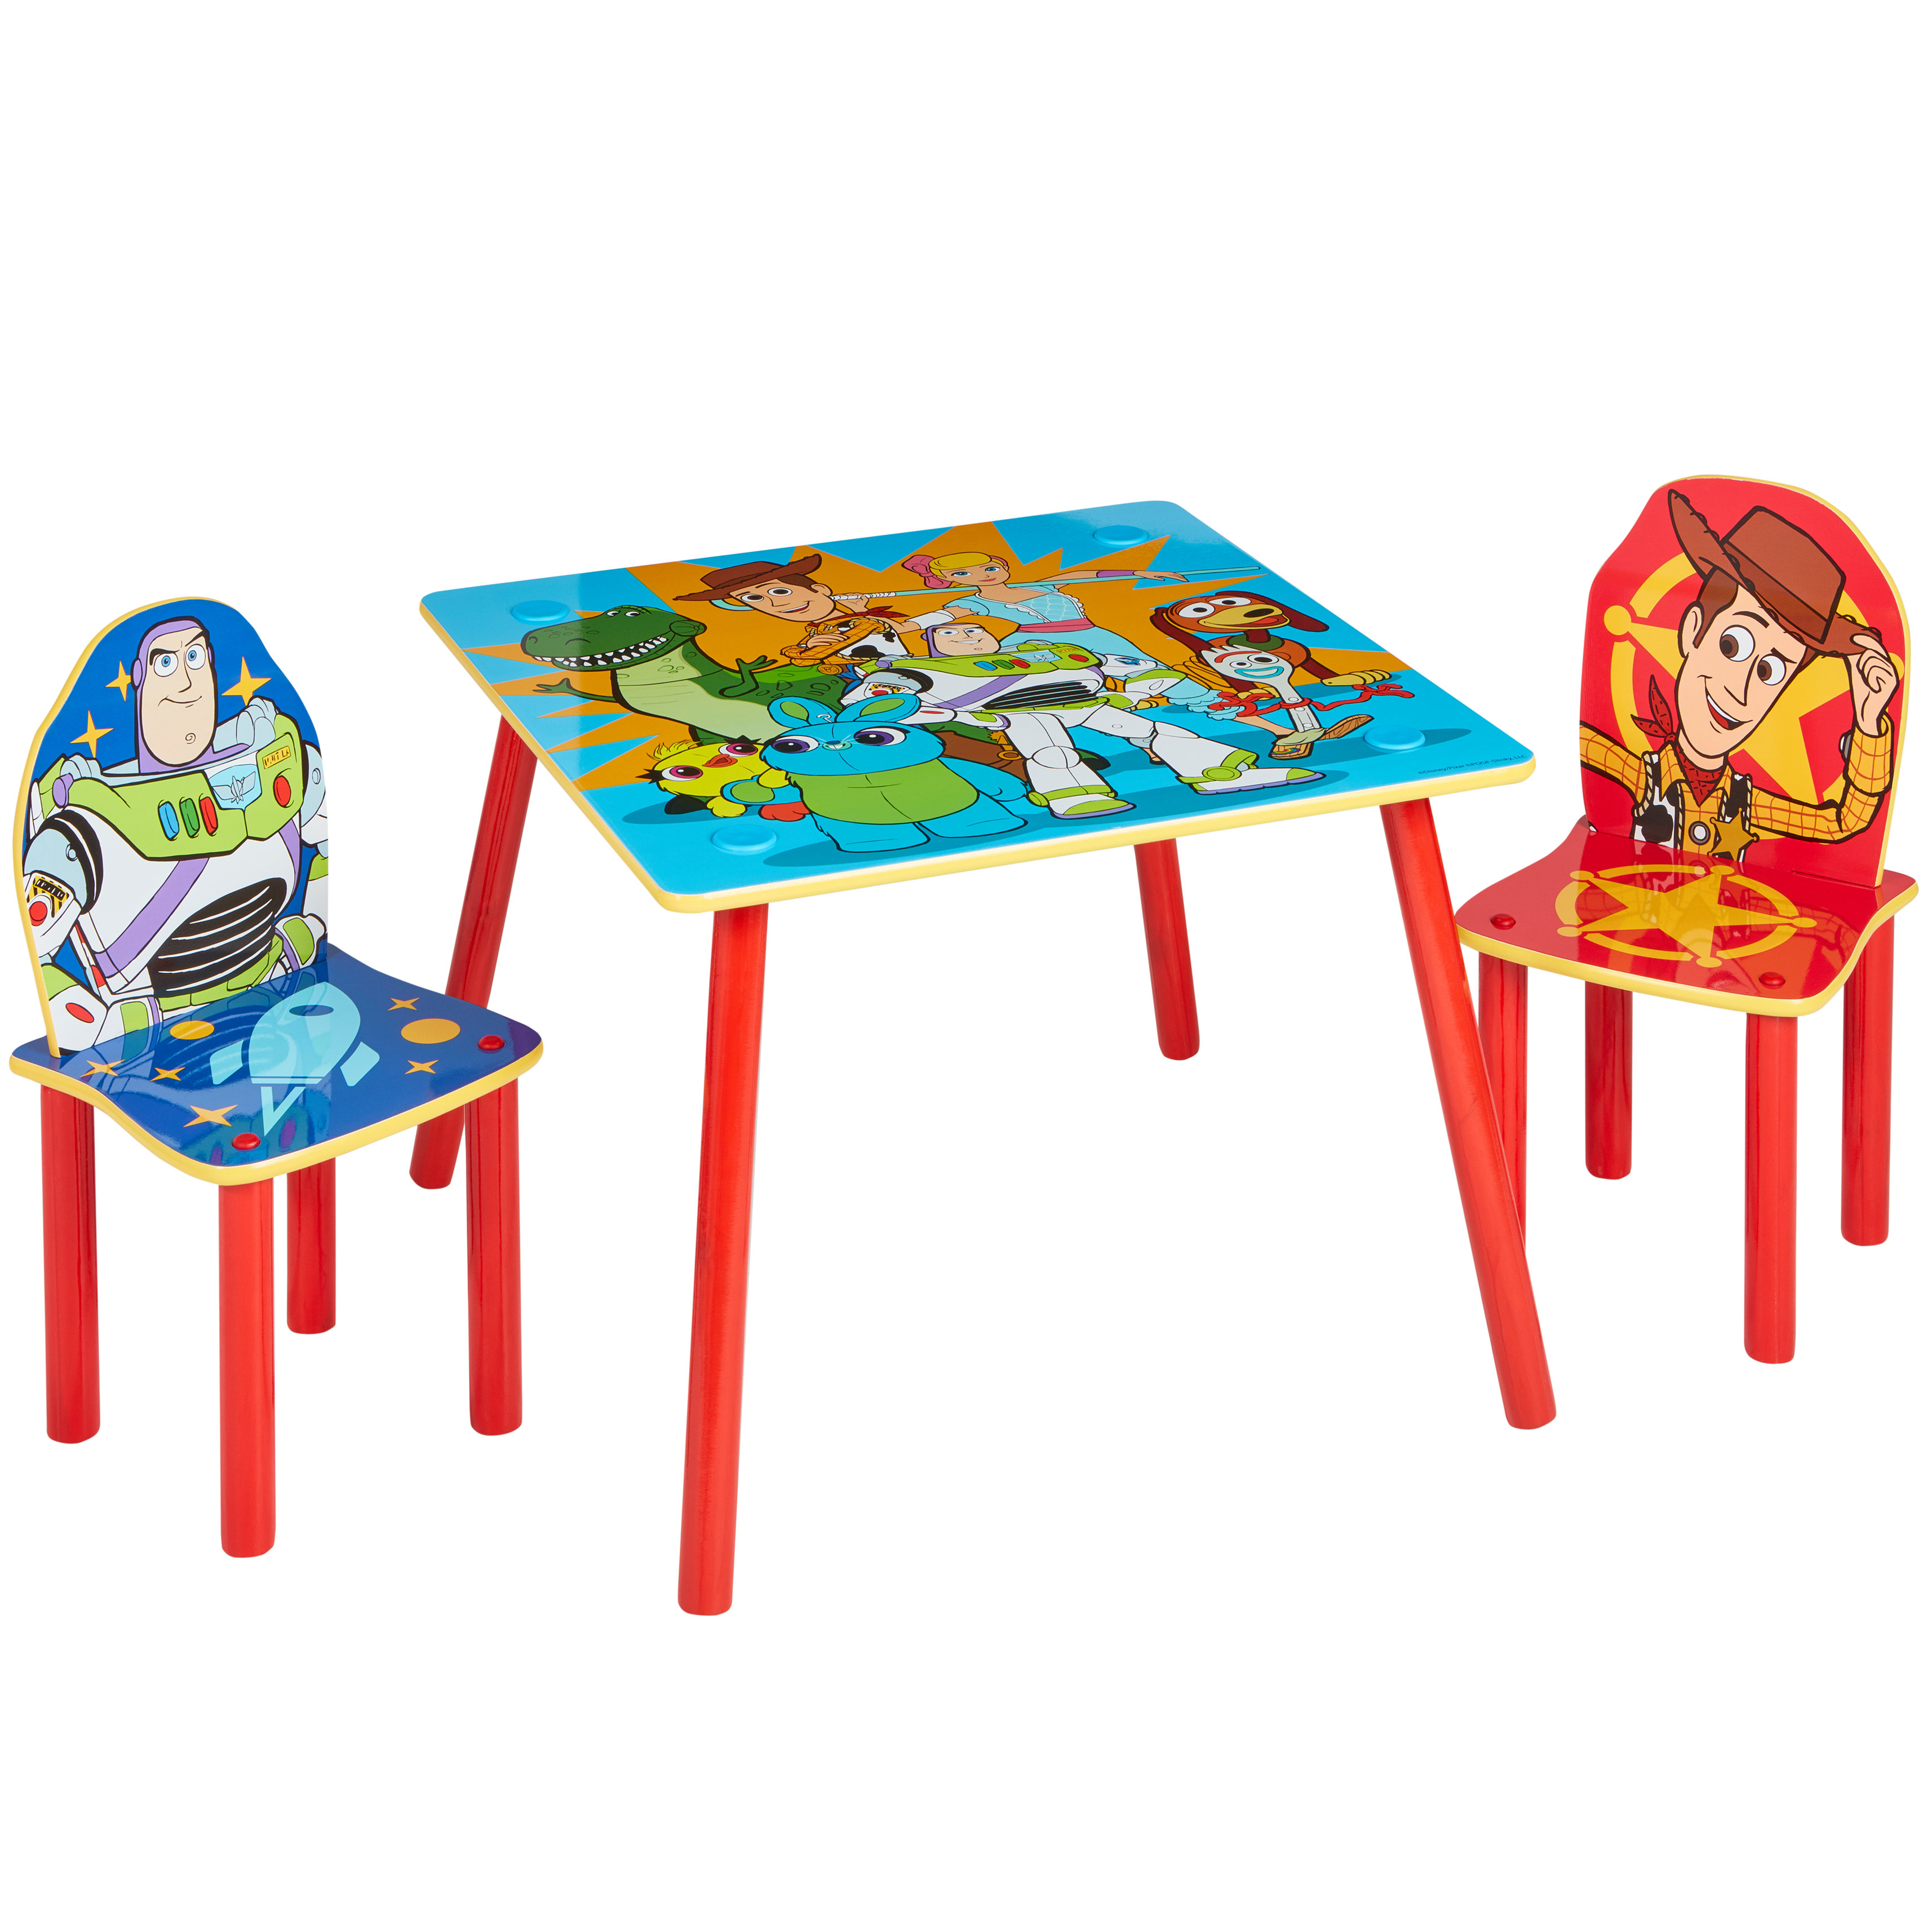 Disney Pixar Disney Toy Story Childrens 3 Piece Table And Chair Set Reviews Wayfaircouk